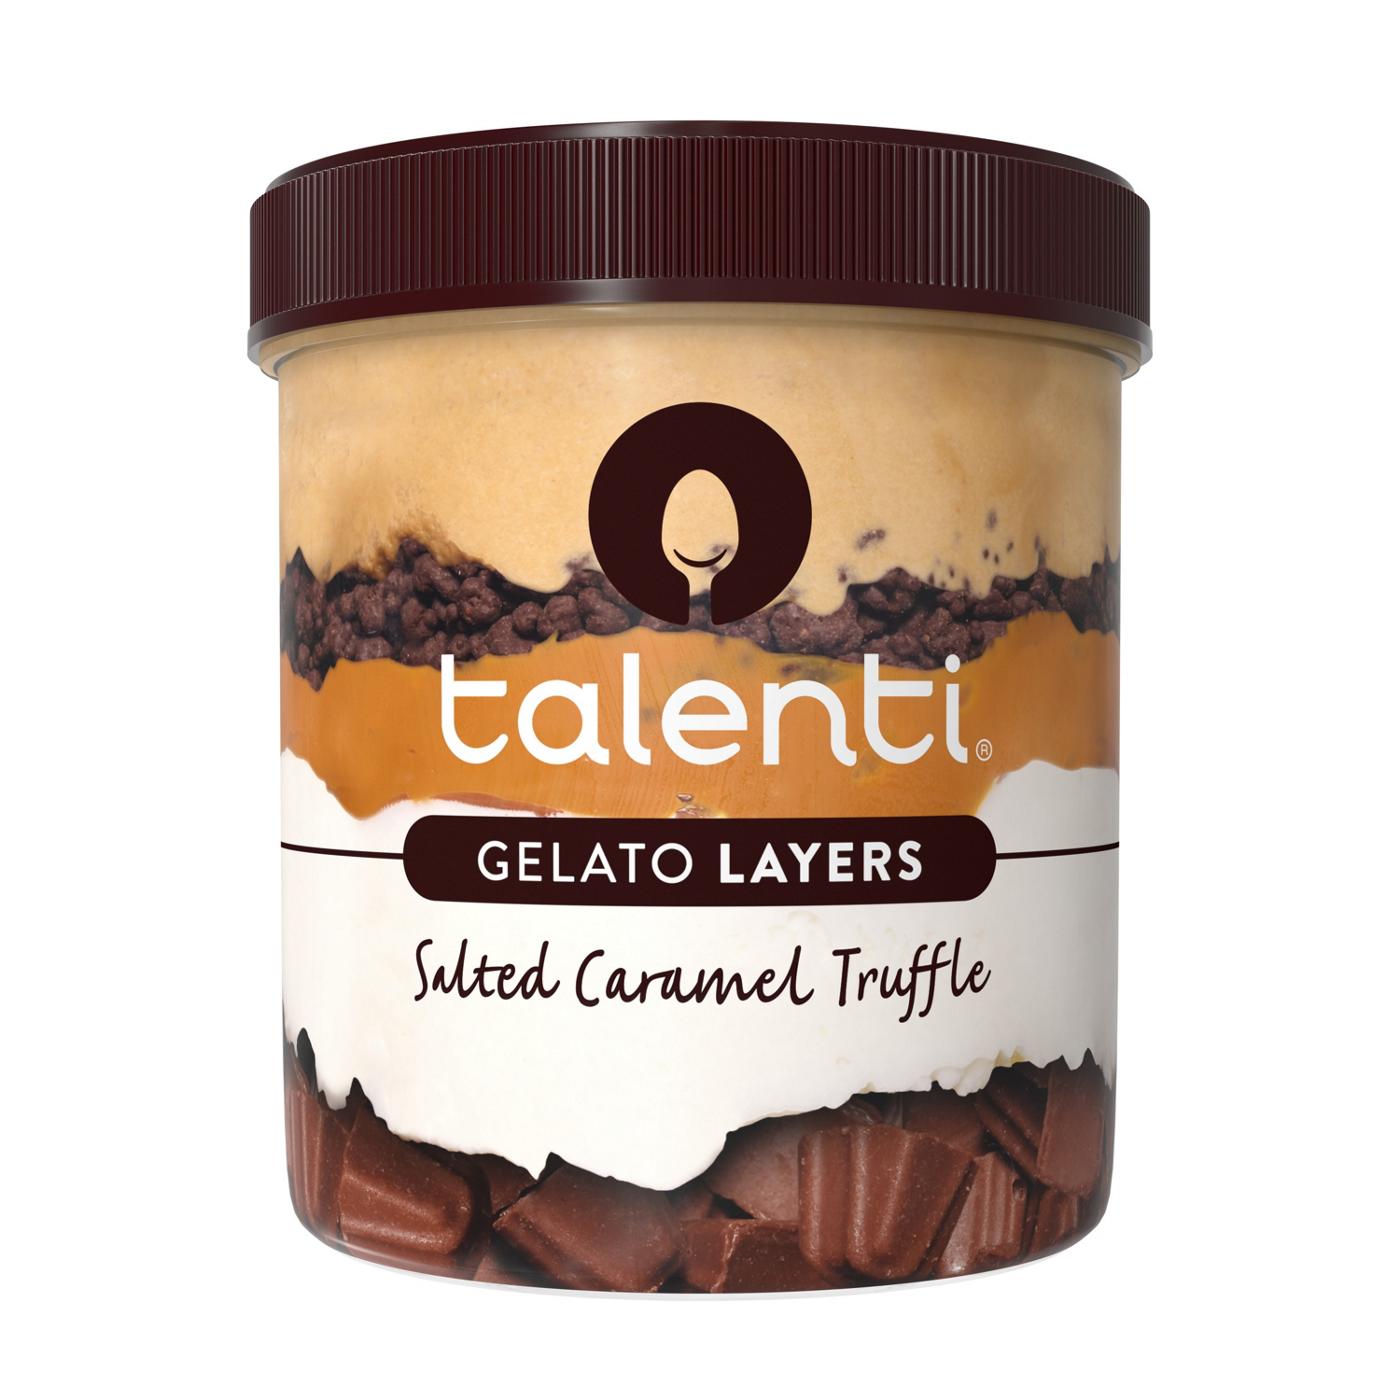 Talenti Gelato Layers Salted Caramel Truffle; image 1 of 3